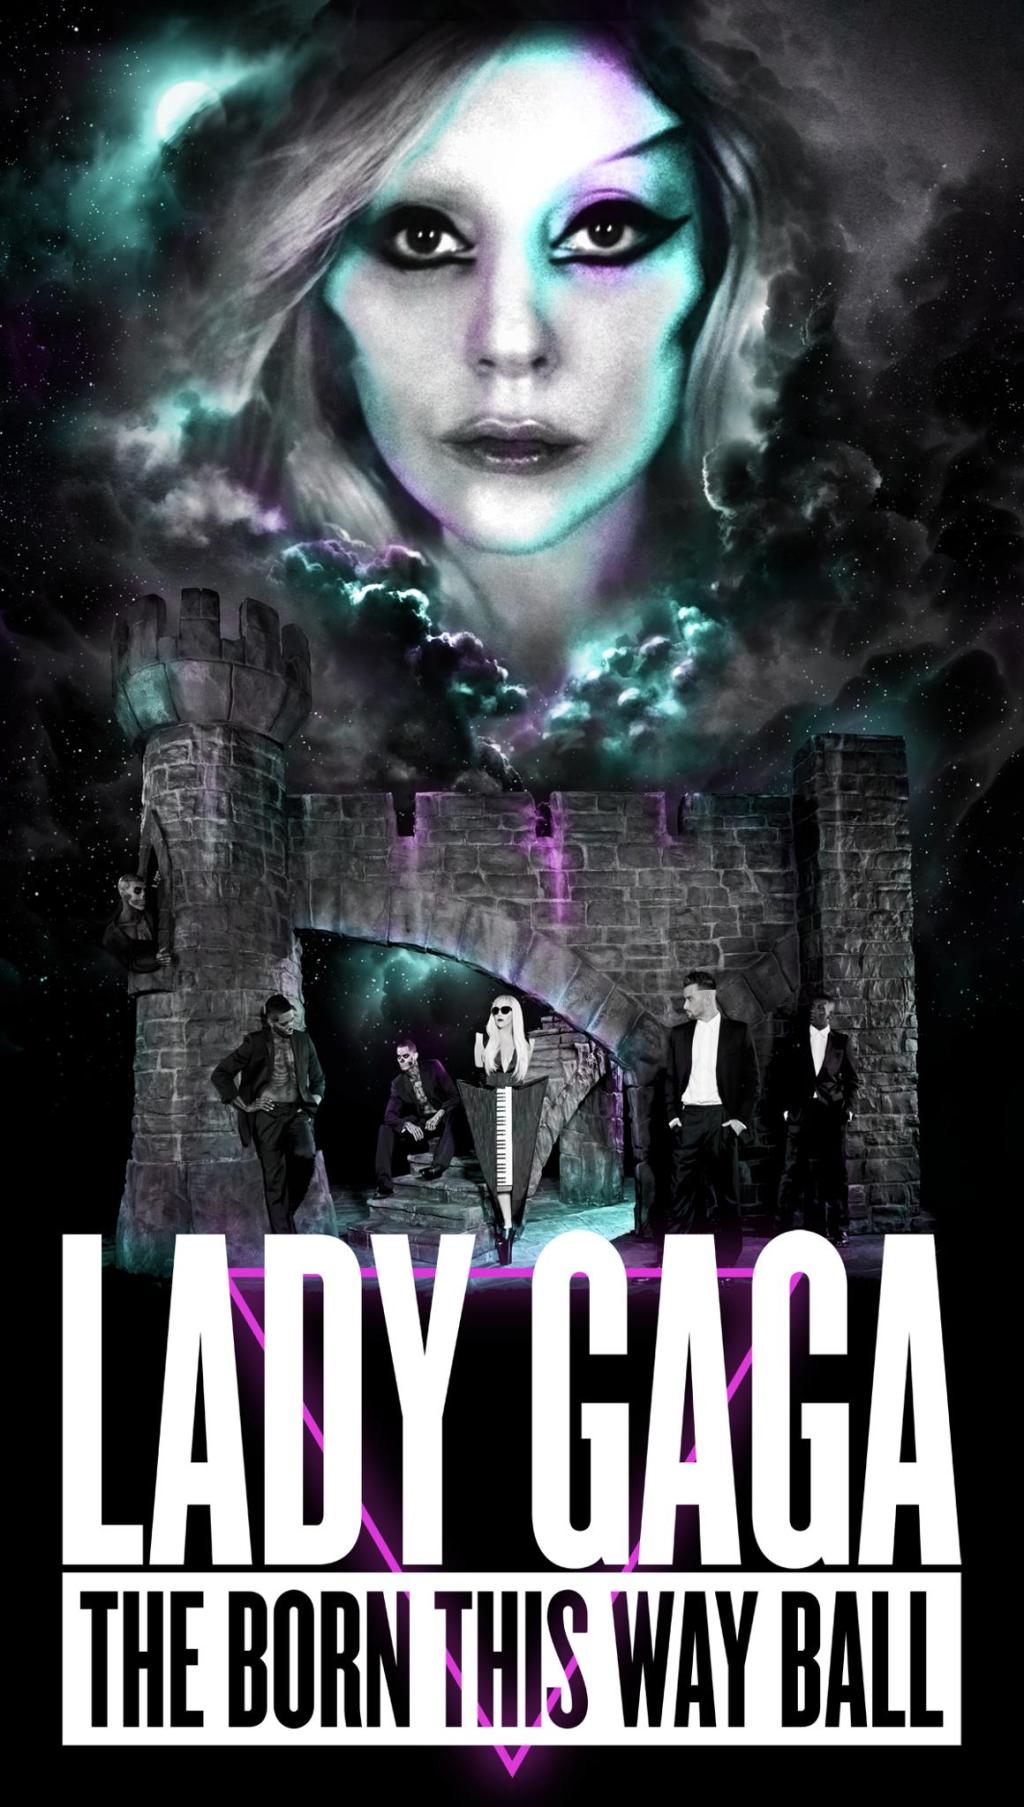 Lady GaGa dice: "Las Drogas inspiraron mi arte"